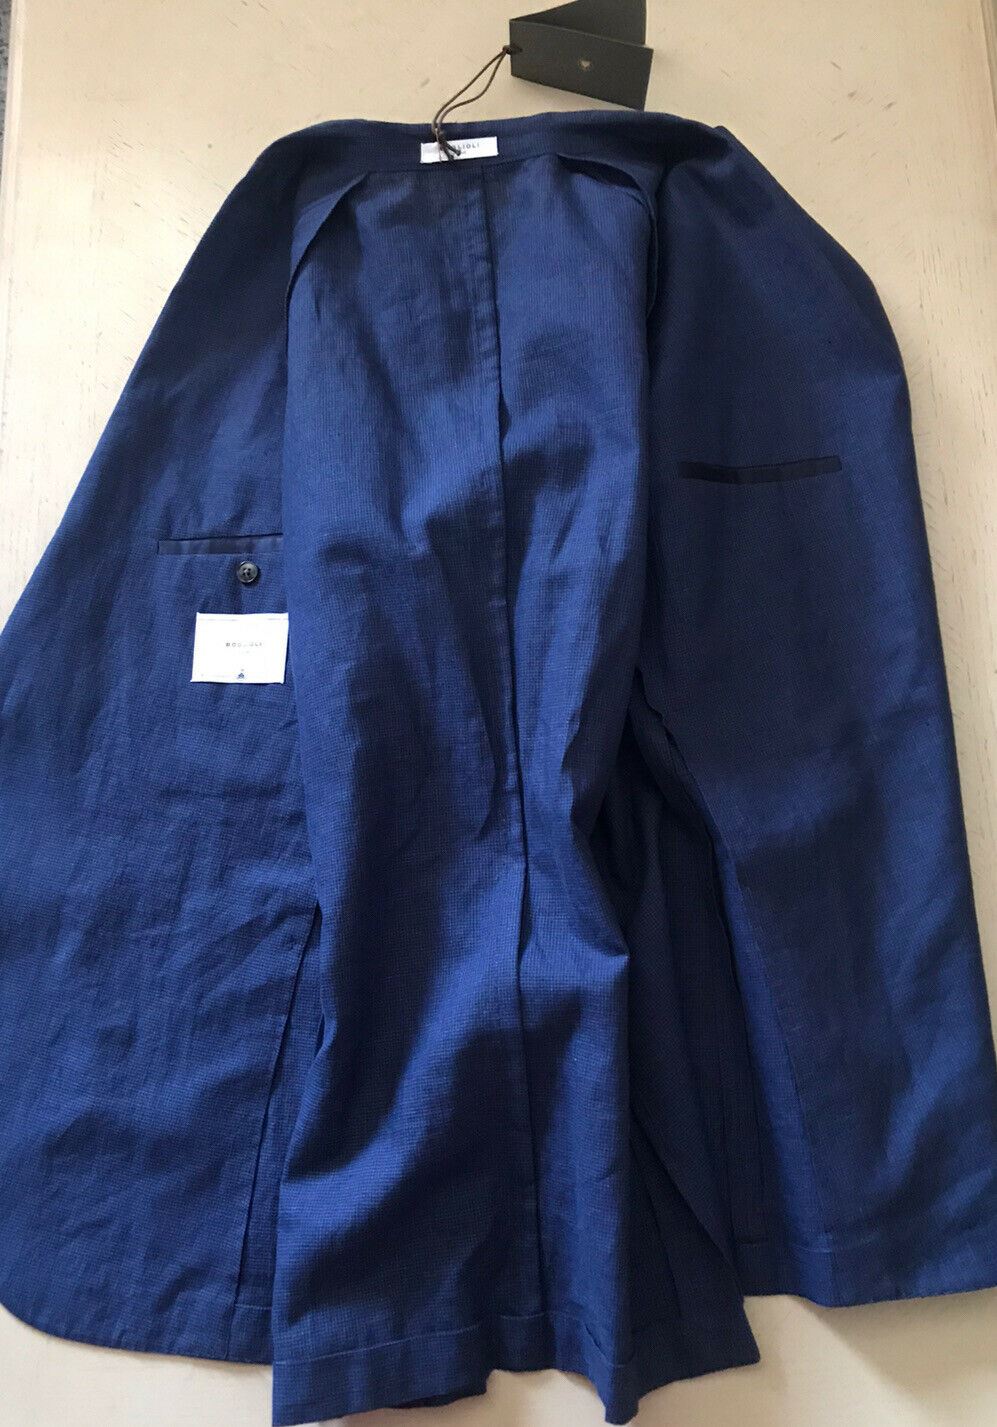 NWT $1295 Boglioli Men Sport Coat Jacket Blazer DK Blue 44R US/54R Eu Italy